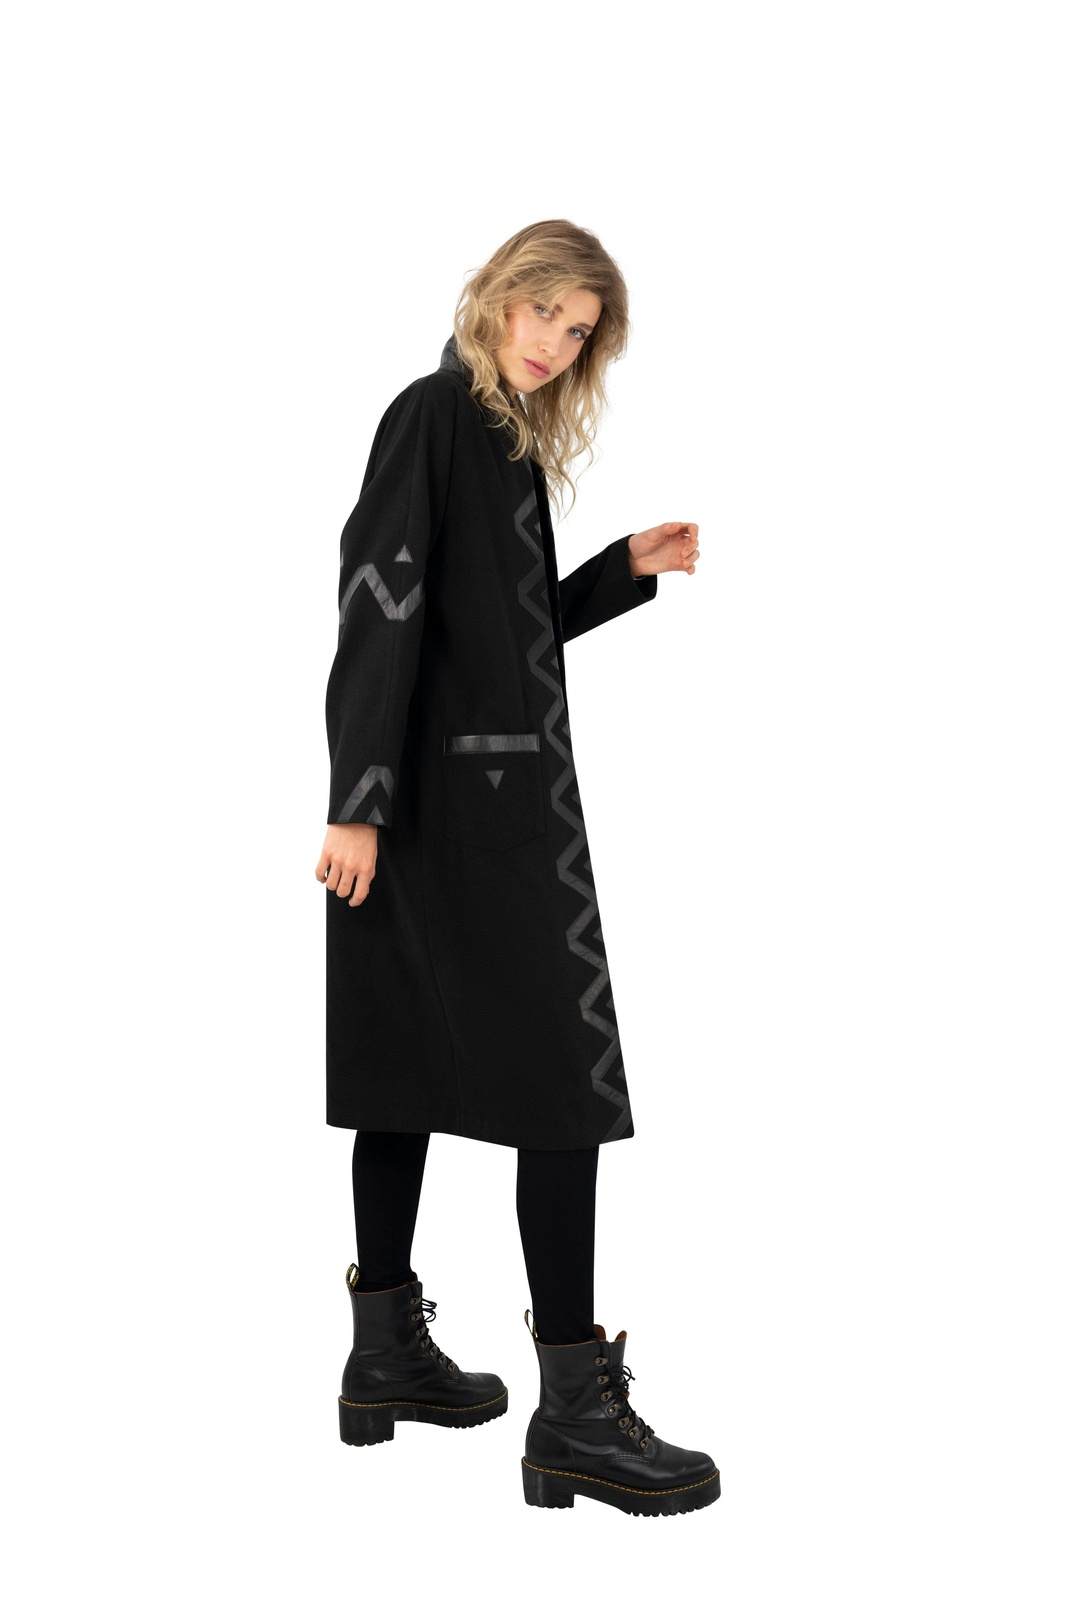 Love Khaos Black Winter Coat, Hipster Style Dark Fashion avant garde